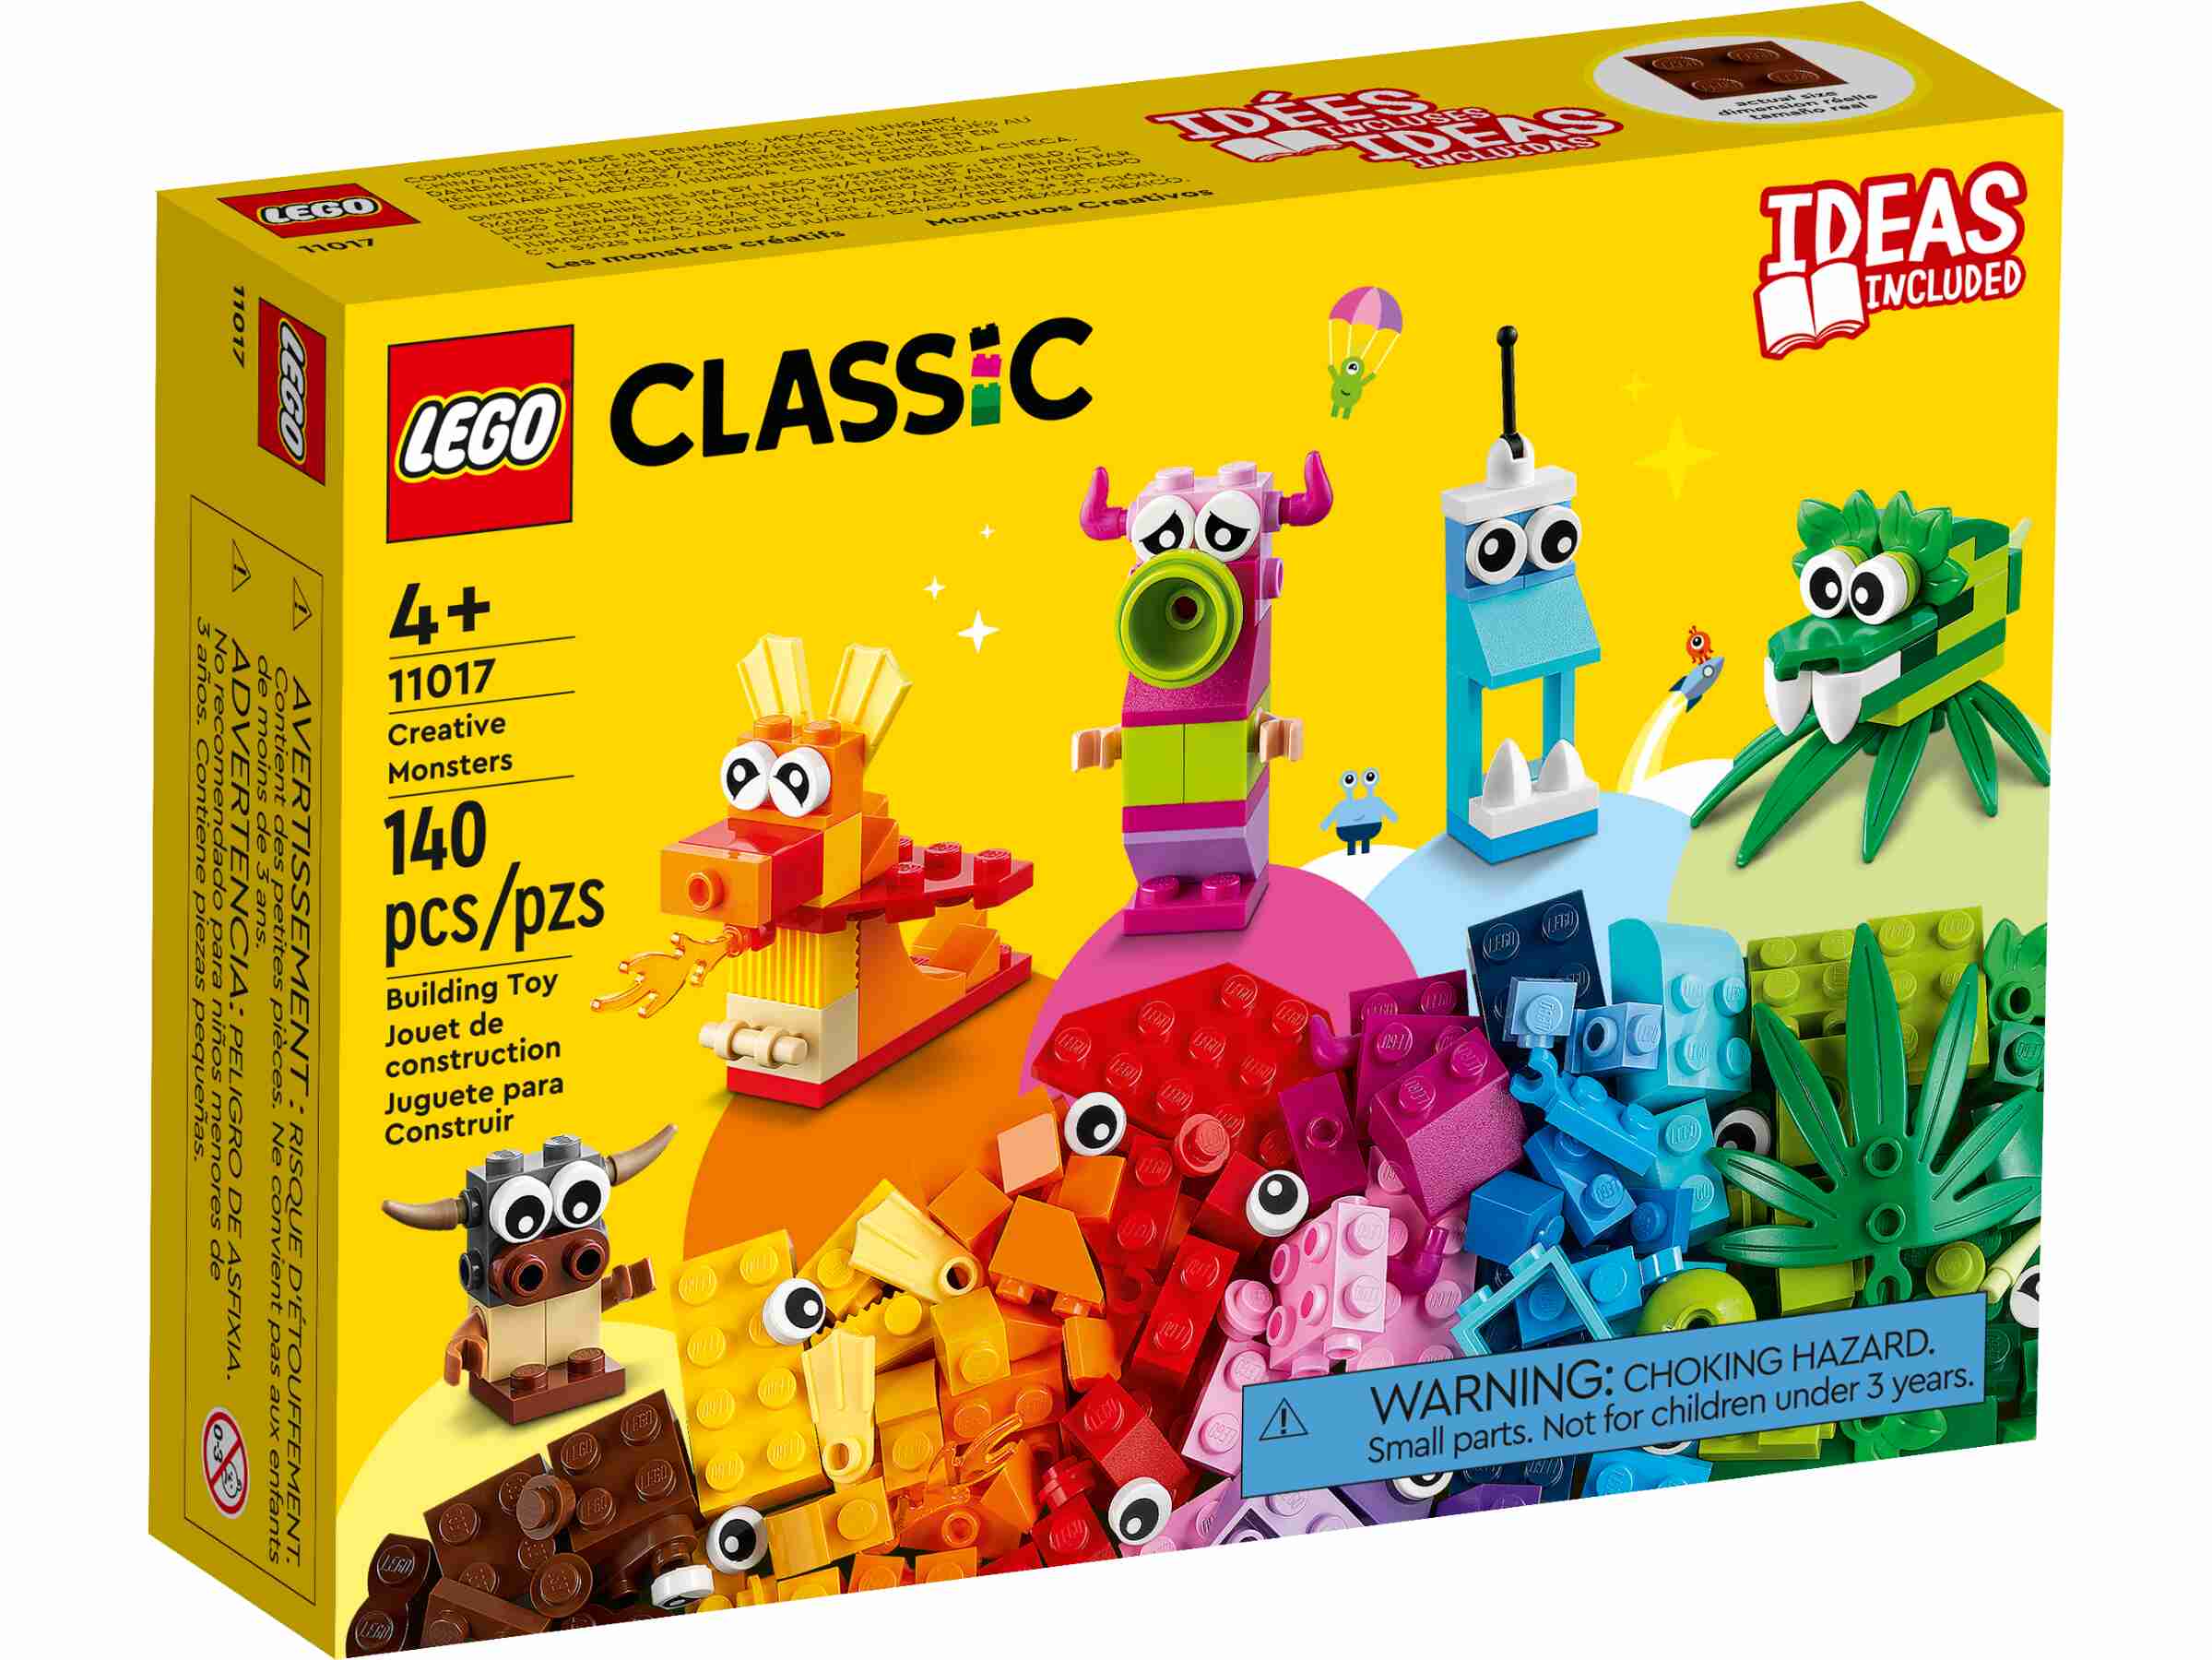 toy ideas: Classic build Lobigo.co.uk: monster Creative Monsters, 11017 Toys LEGO 5